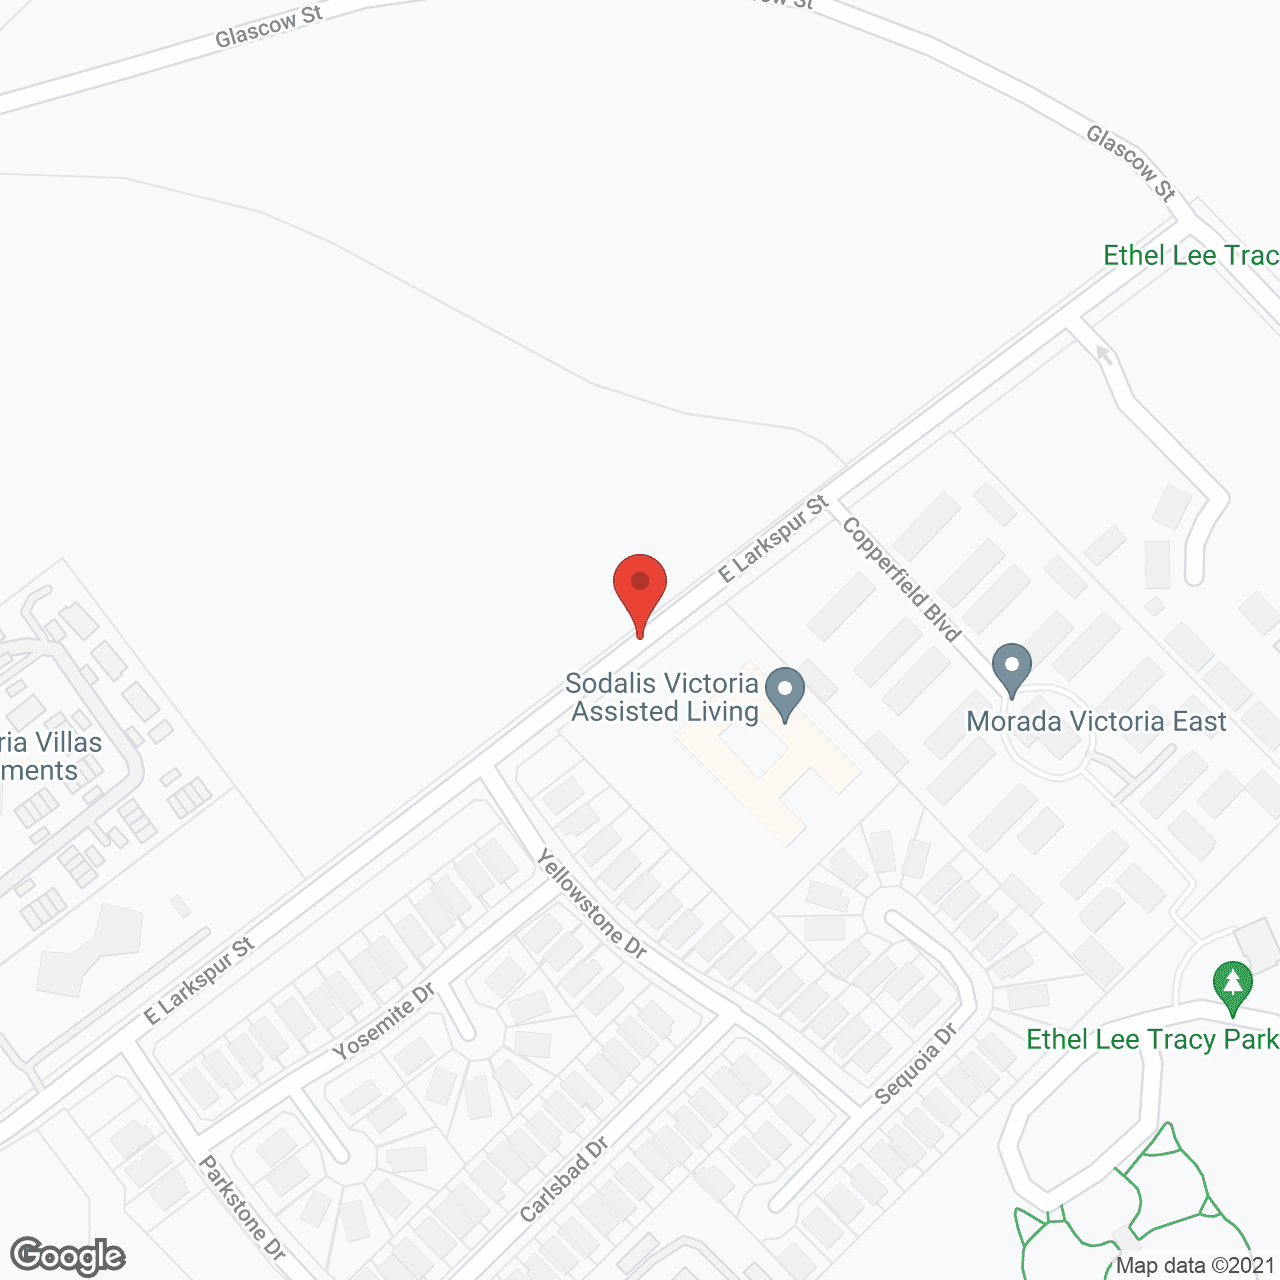 Morada Victoria East in google map